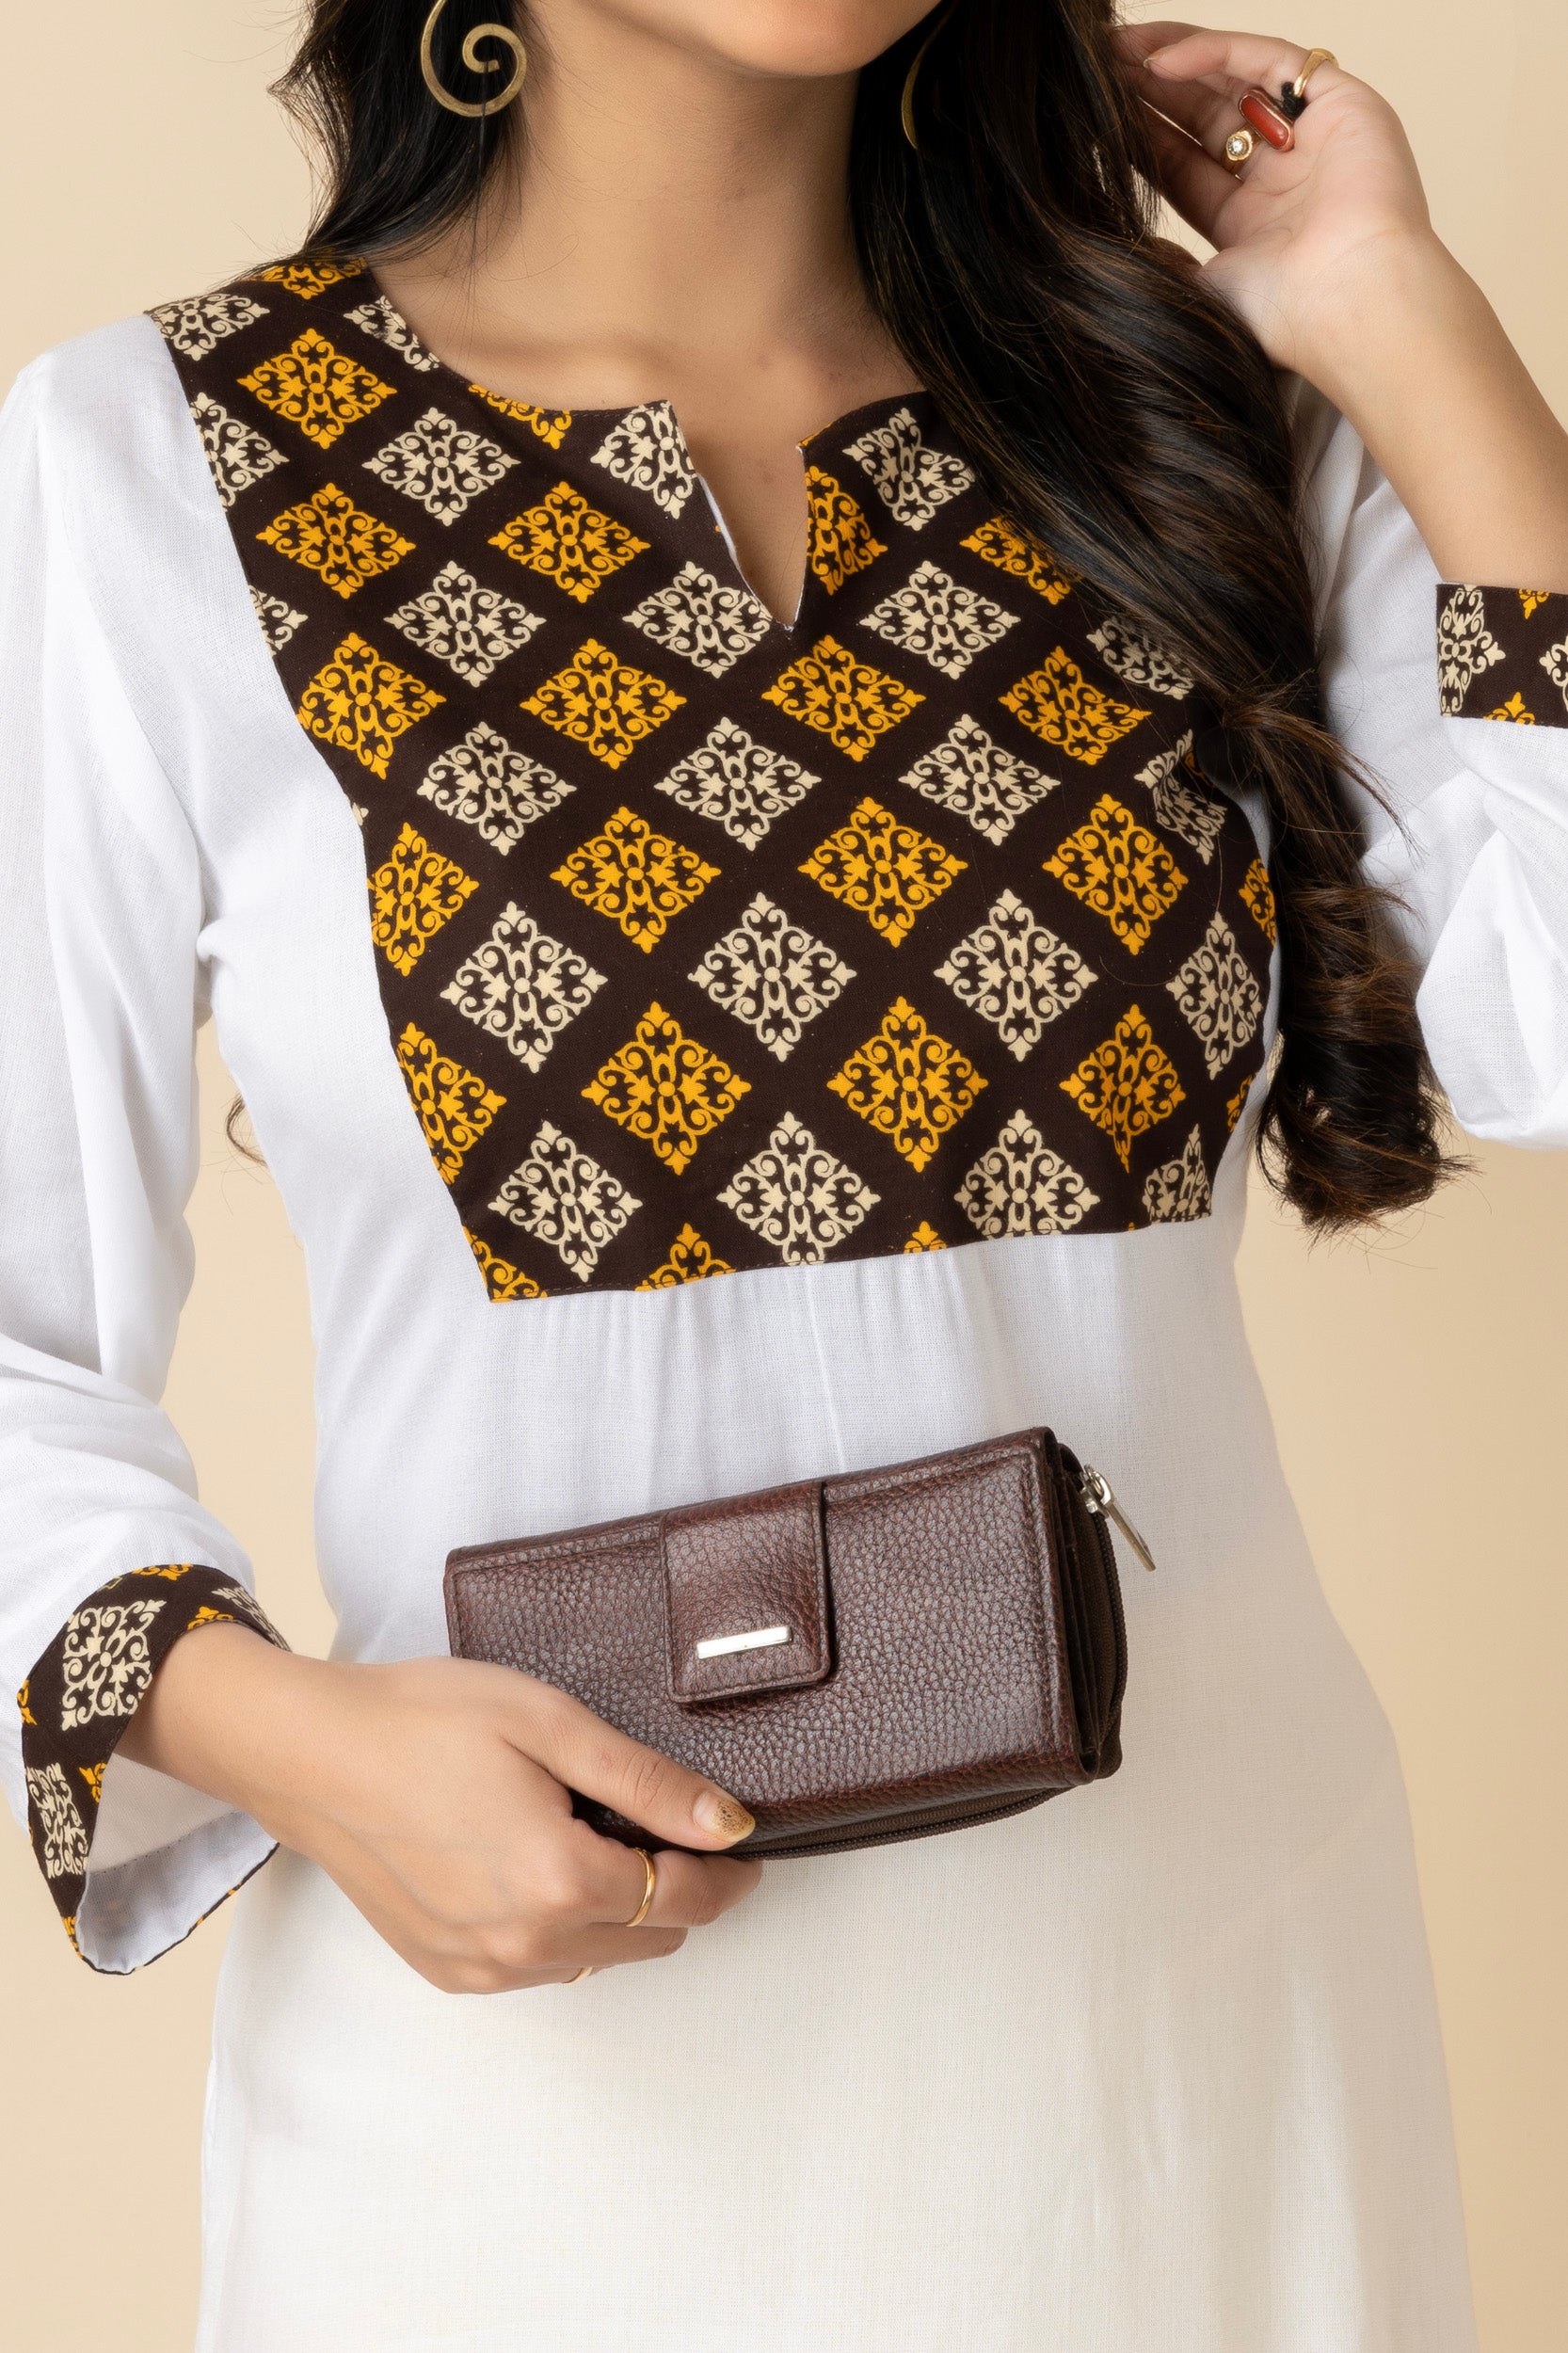 shantiniketan-pure-leather-brown-double-flip-clutch-handbag-6-3-for-women